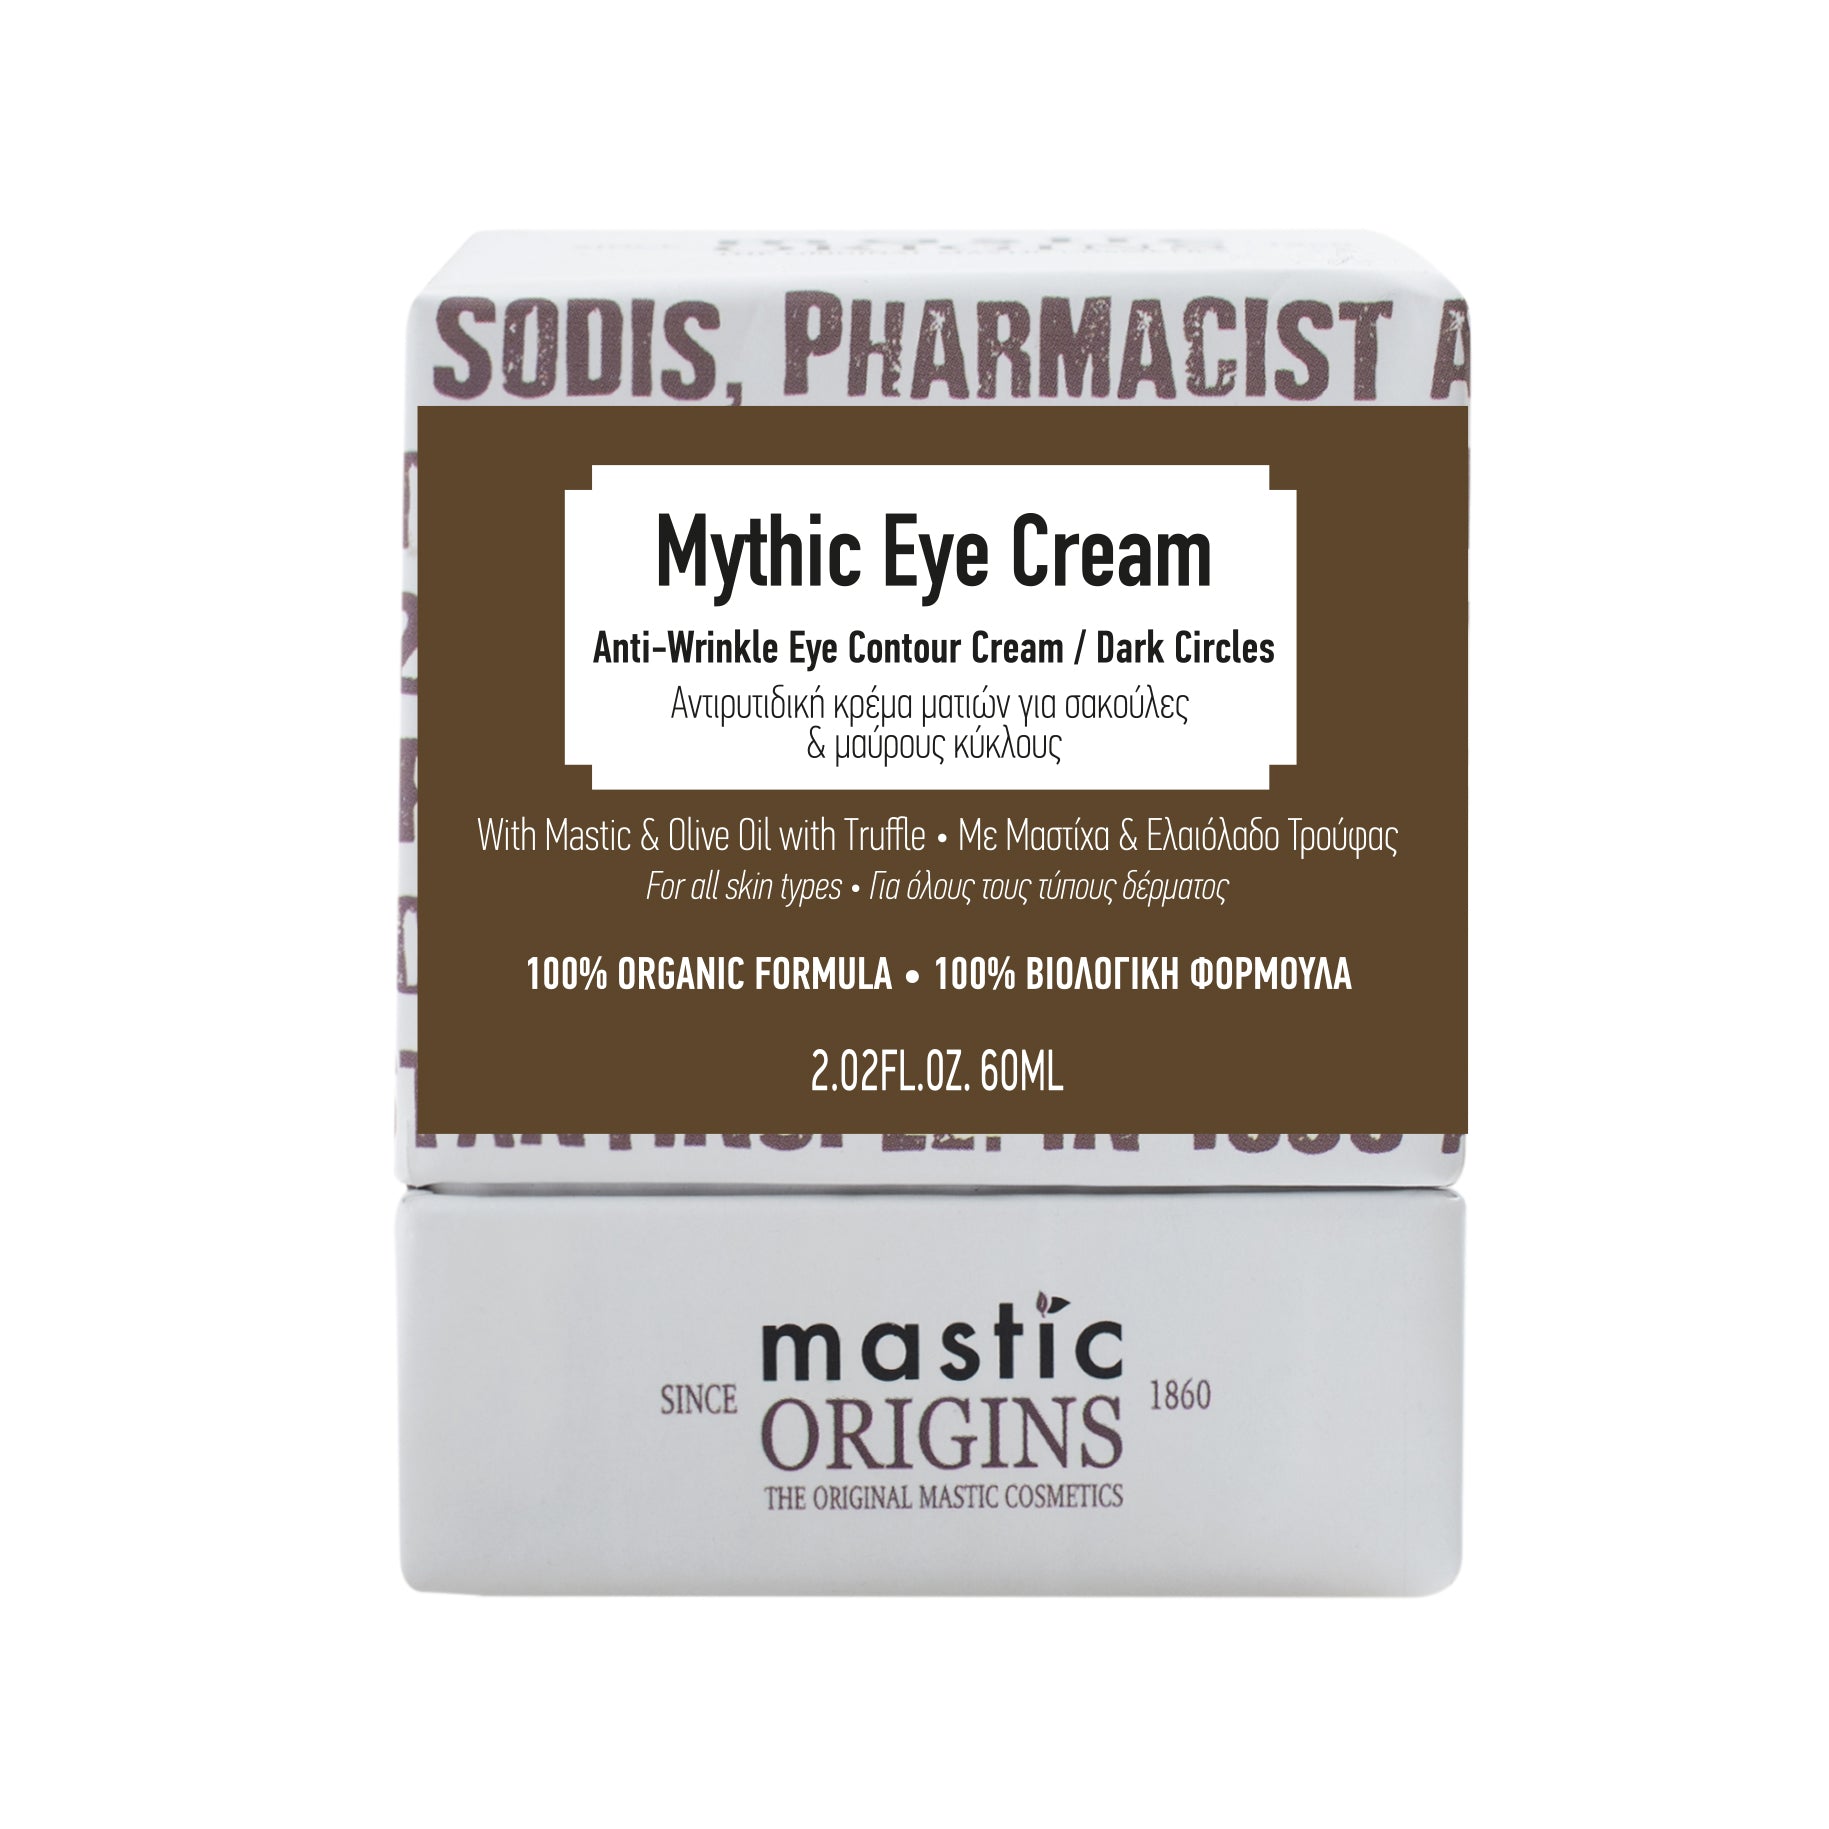 MythicEye Cream